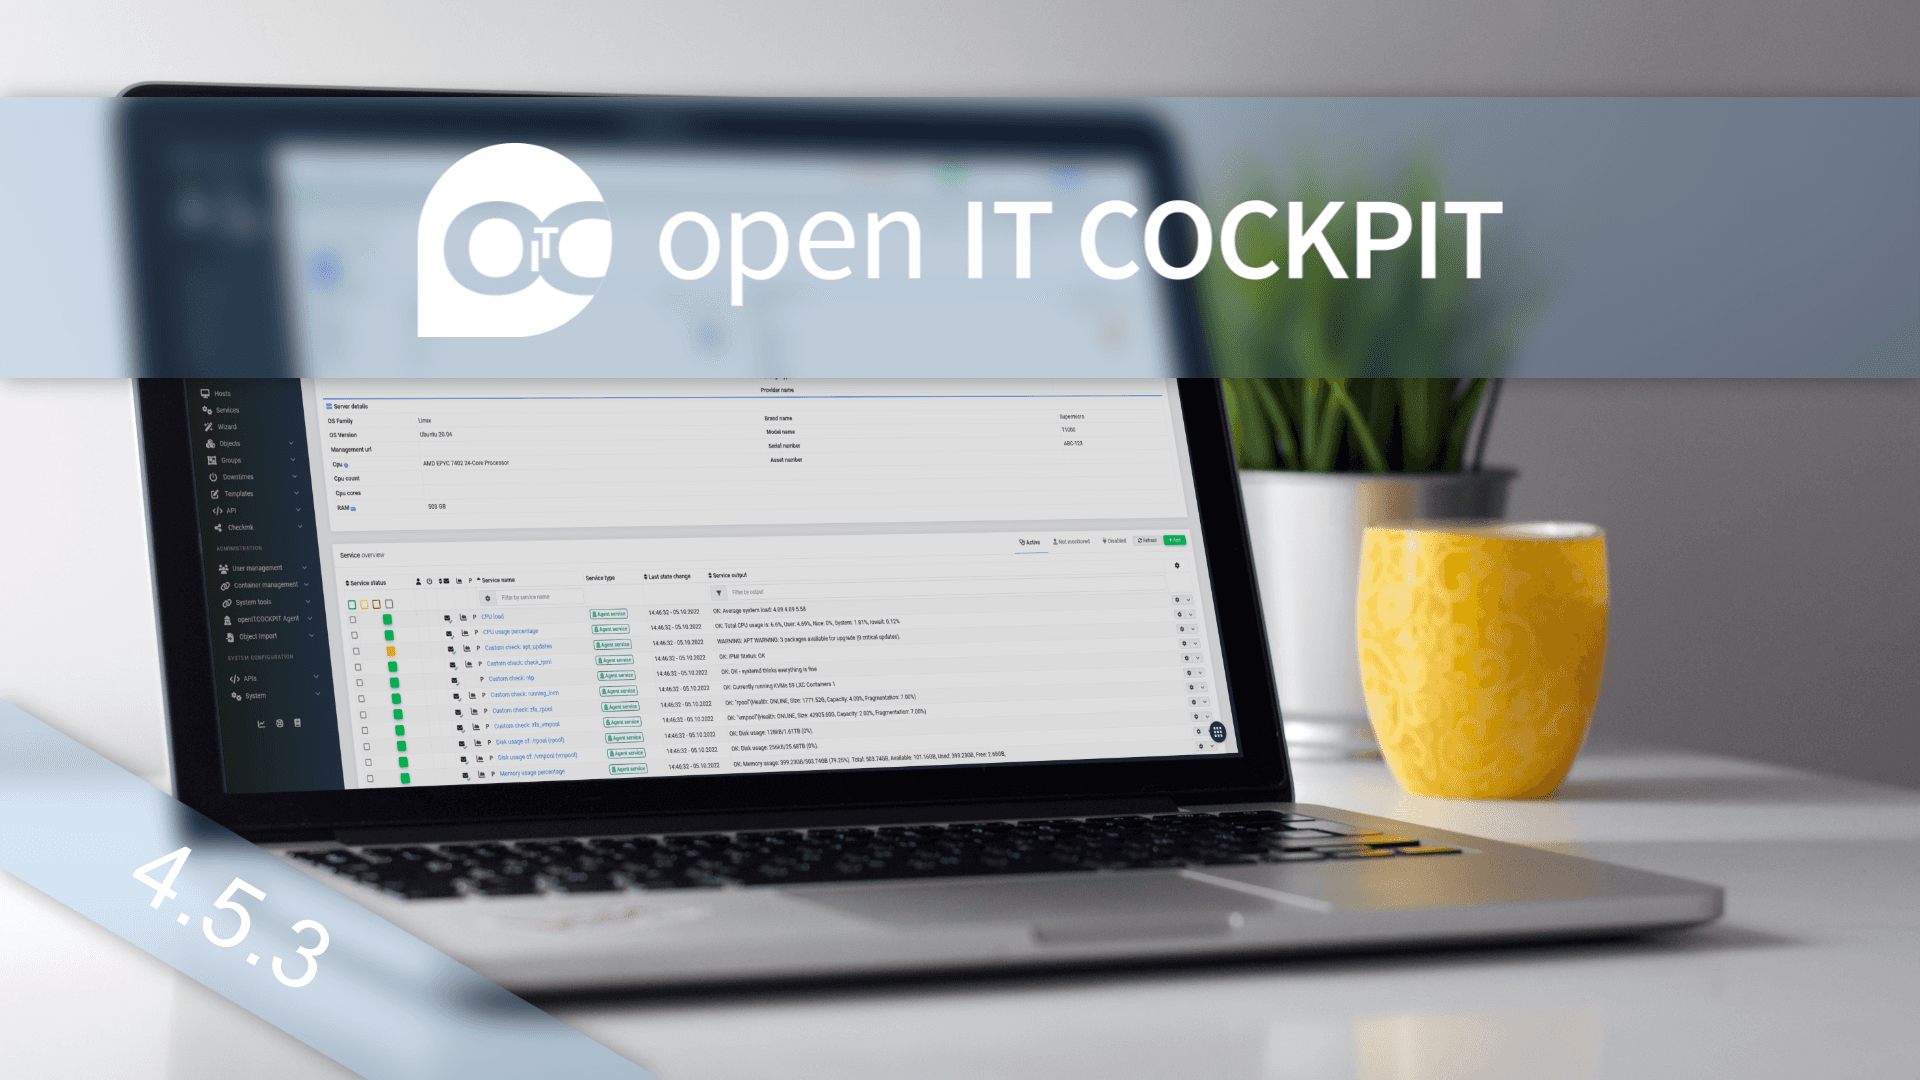 openITCOCKPIT 4.5.3 released